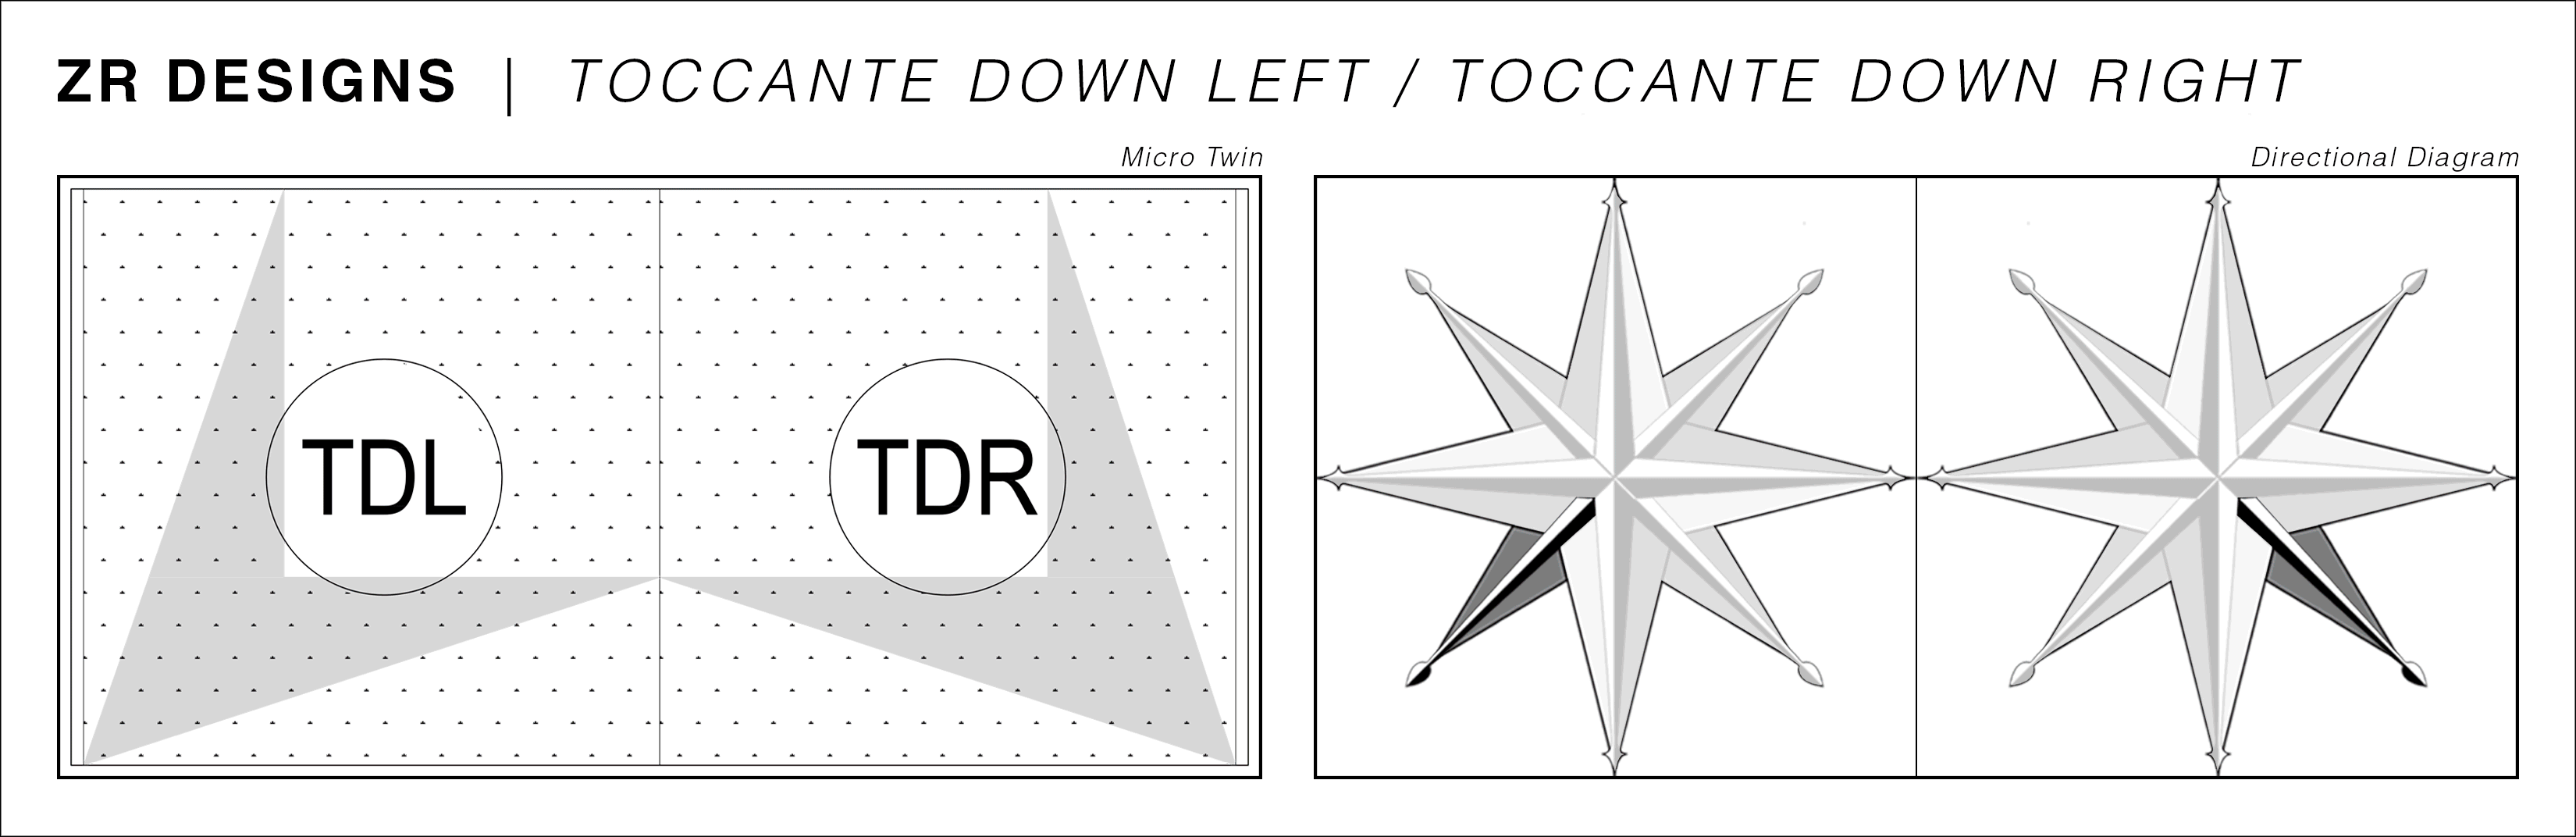 02a-TDLTDR